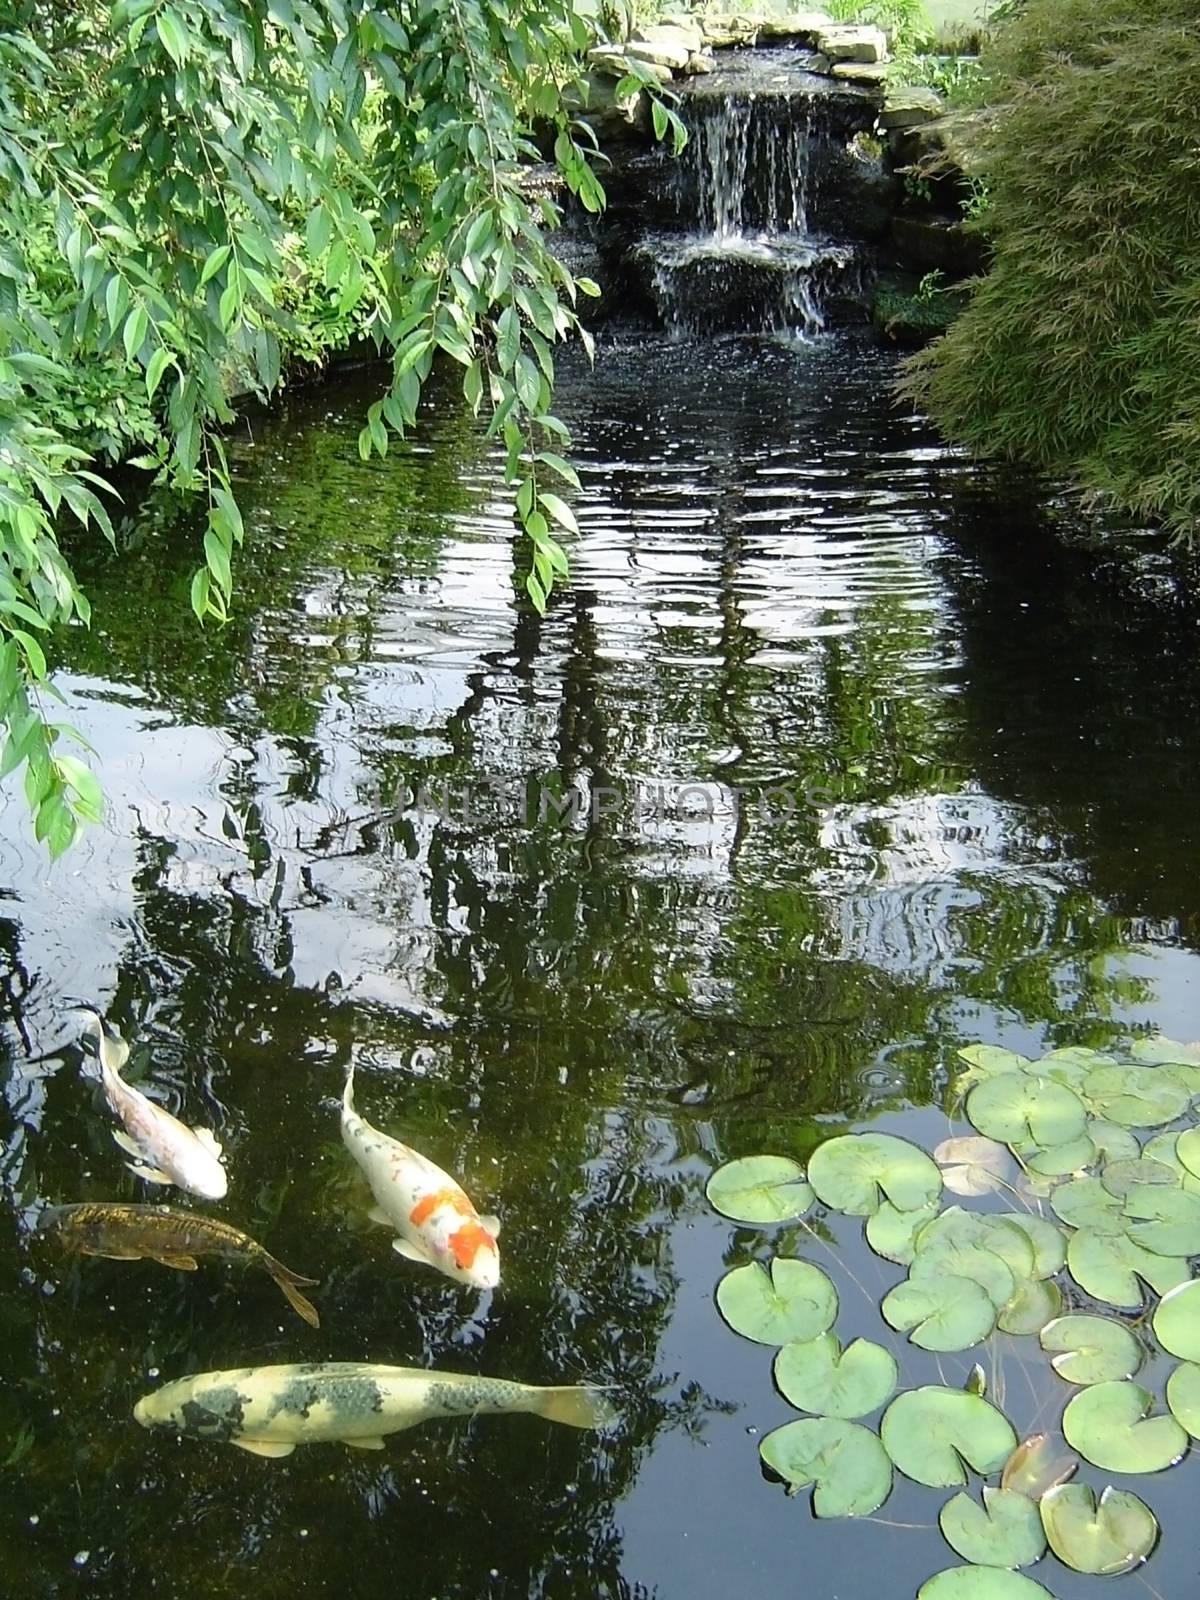 Koi in the quiet pond